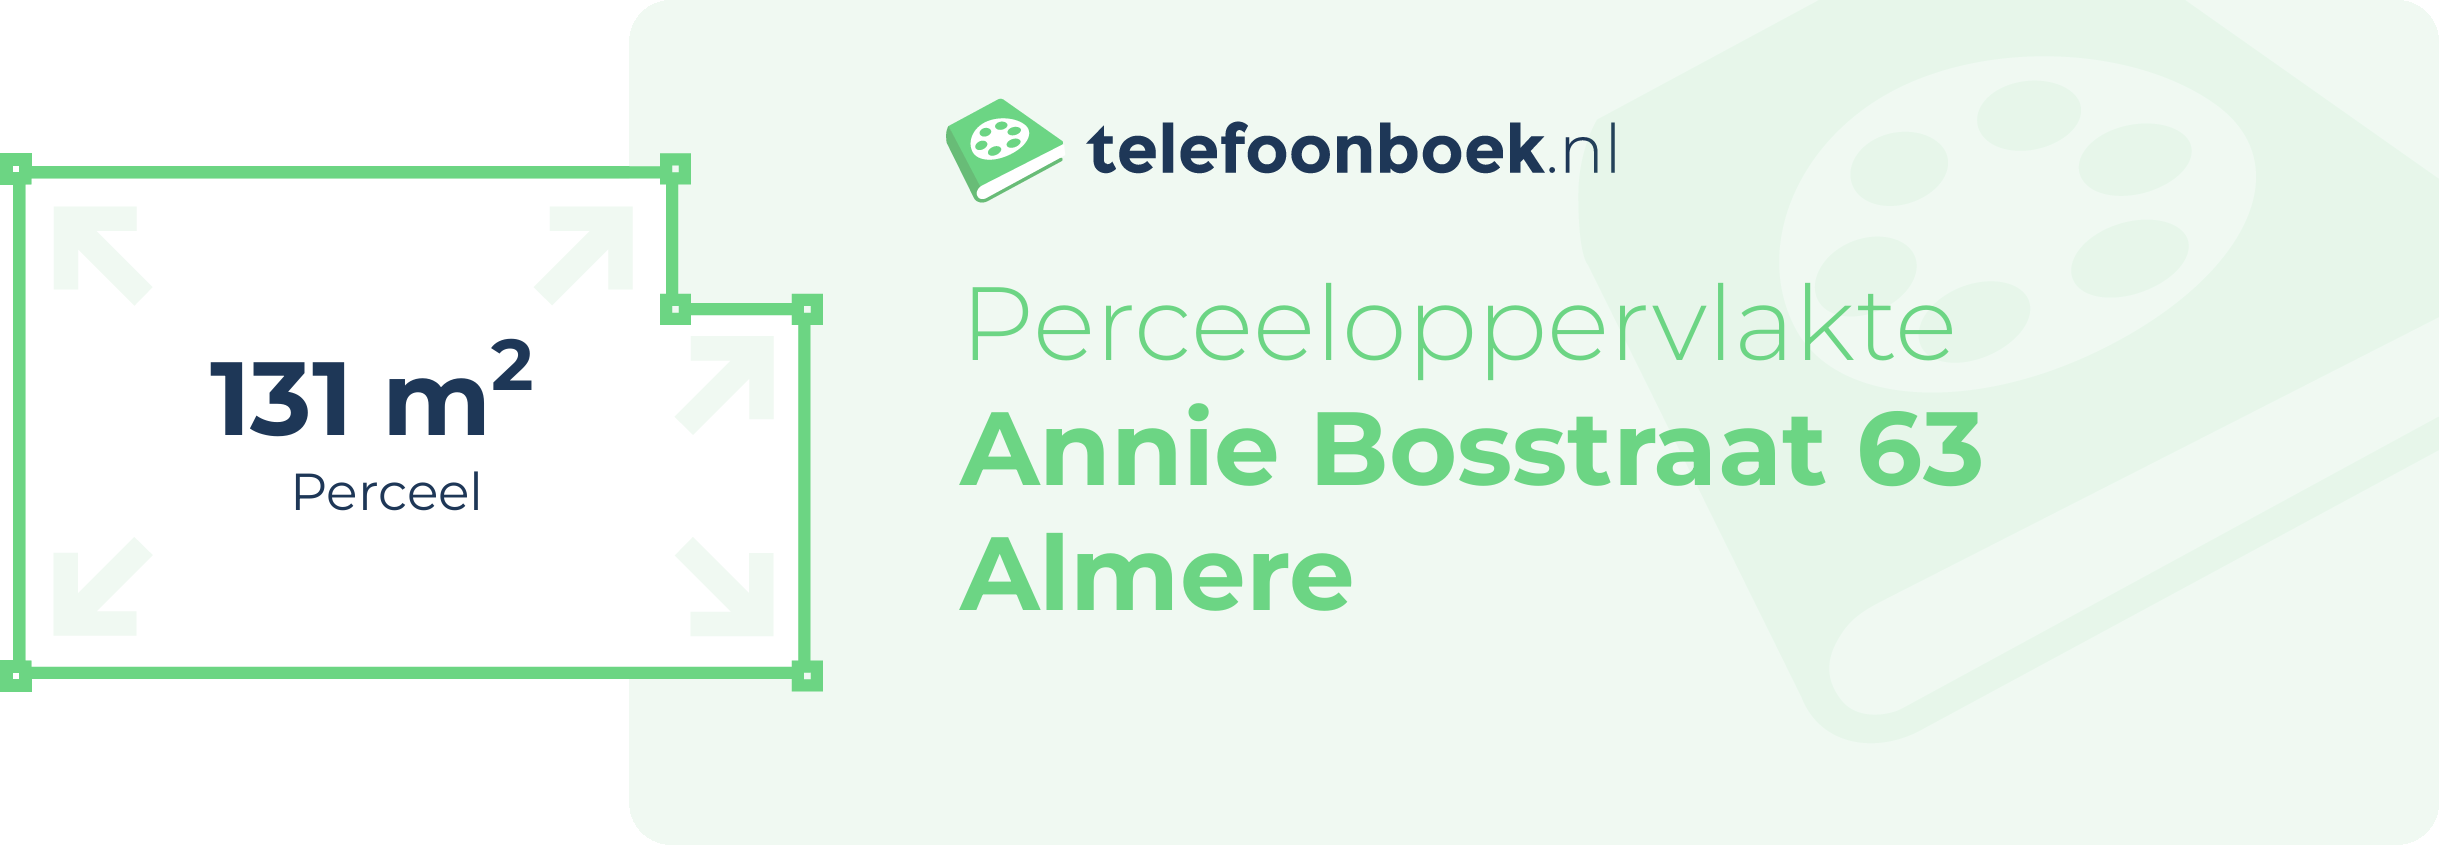 Perceeloppervlakte Annie Bosstraat 63 Almere